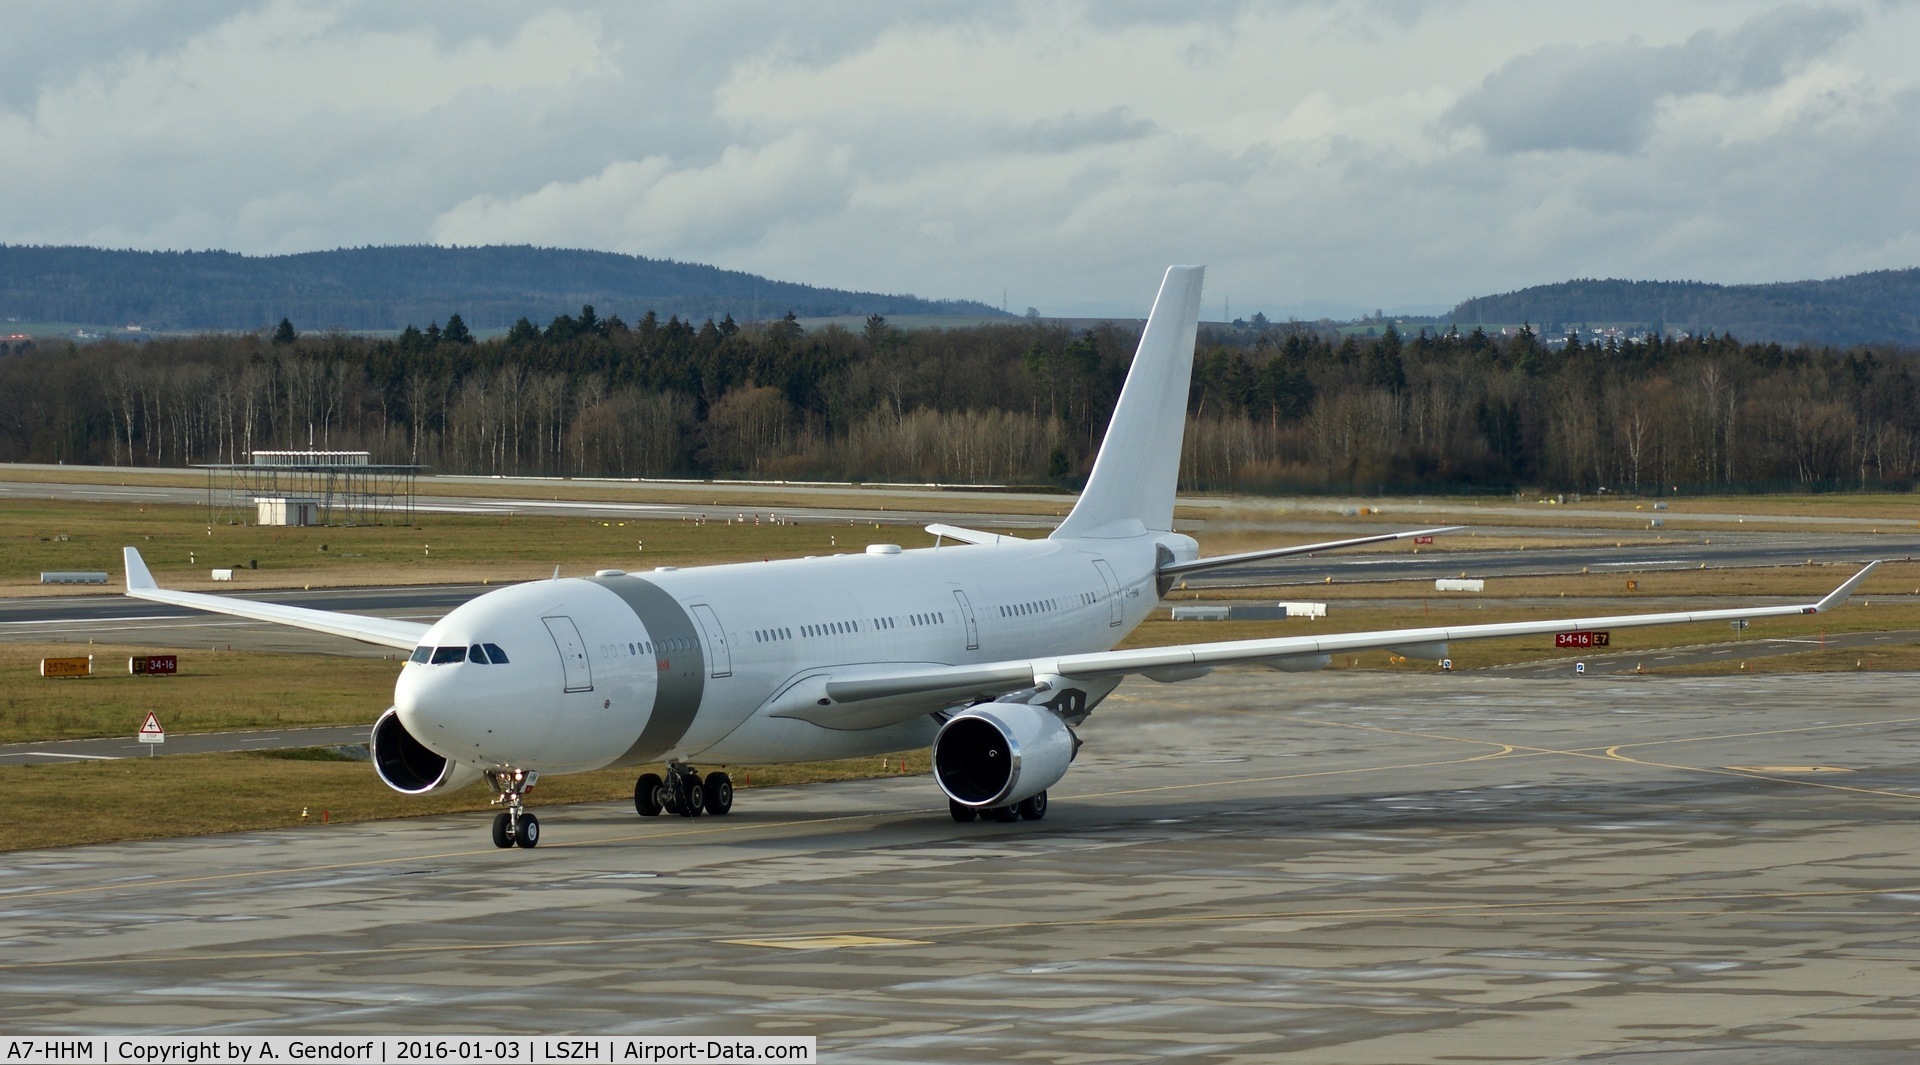 A7-HHM, 2004 Airbus A330-203 C/N 605, Qatar Amiri Flight (untitled), is here taxiing at Zürich-Kloten(LSZH)